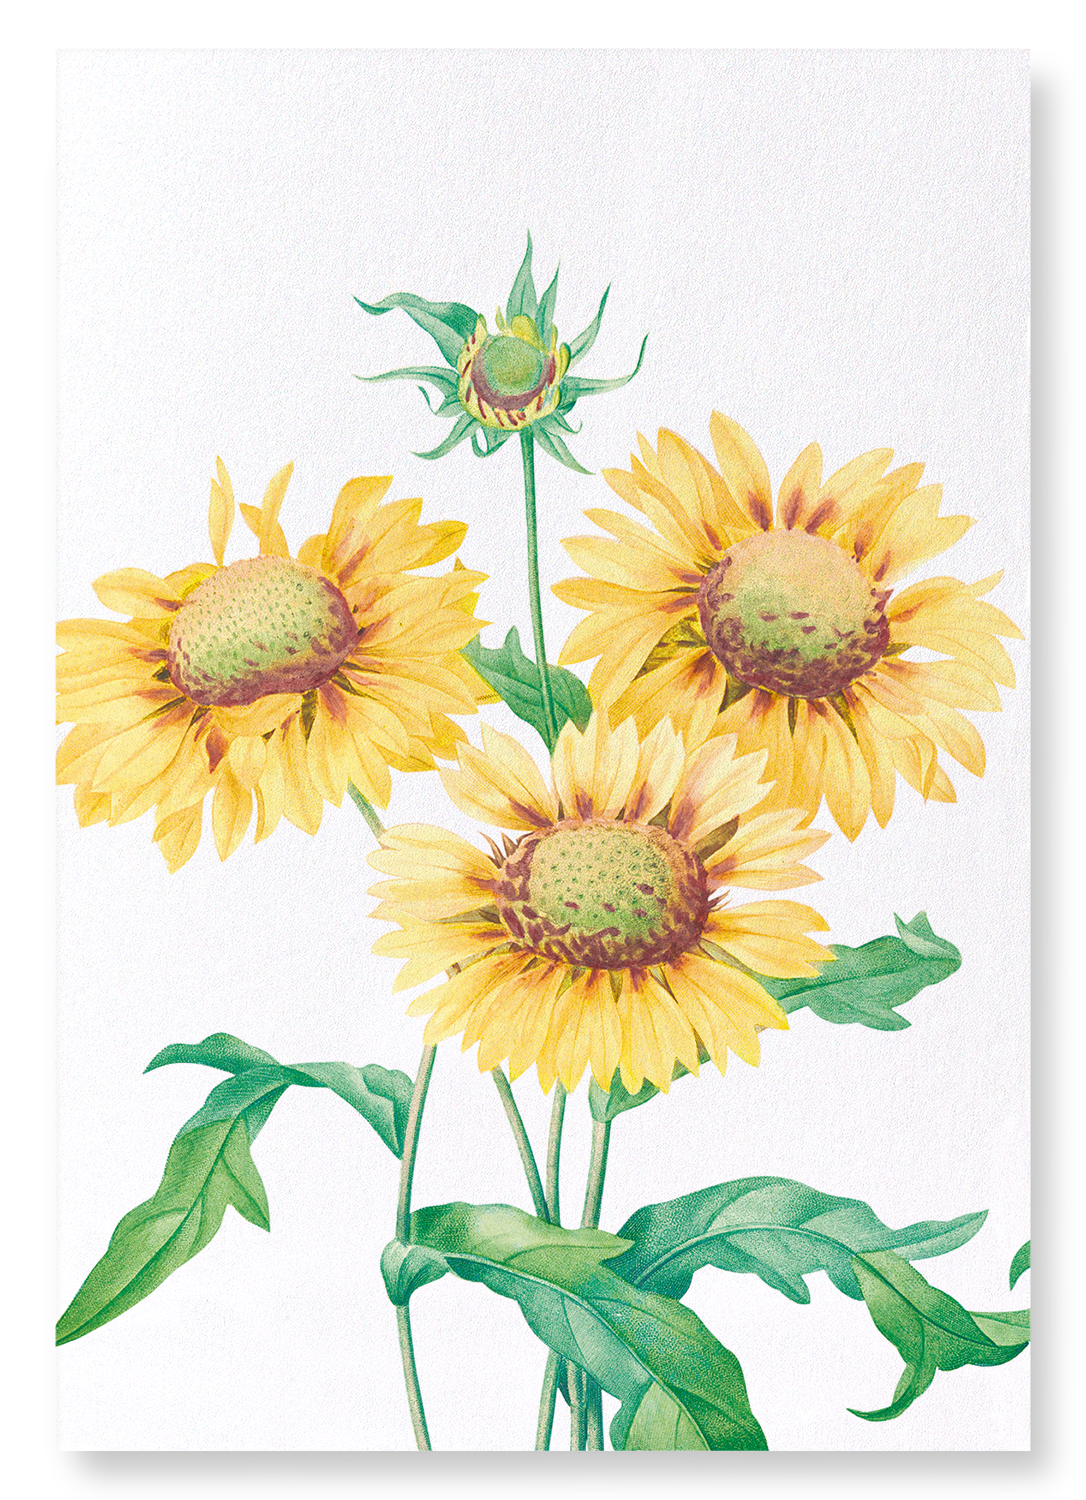 GALLARDIA BLANKET FLOWER: Botanical Art Print